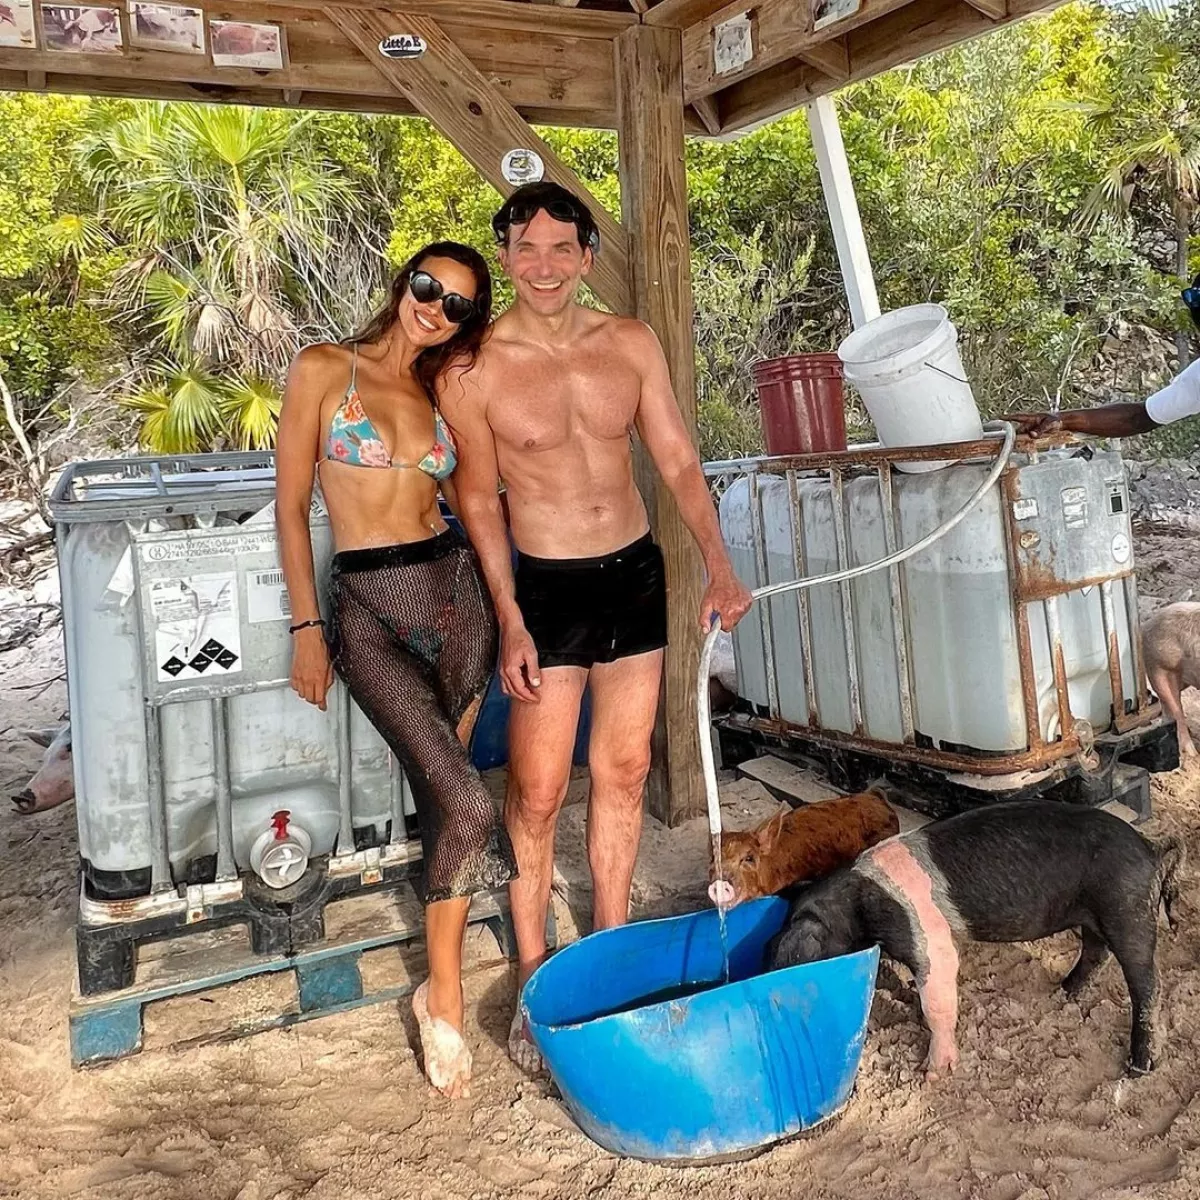 Bradley Cooper and Irina Shayk enjoyed a vacation together (Photo: Instagram)